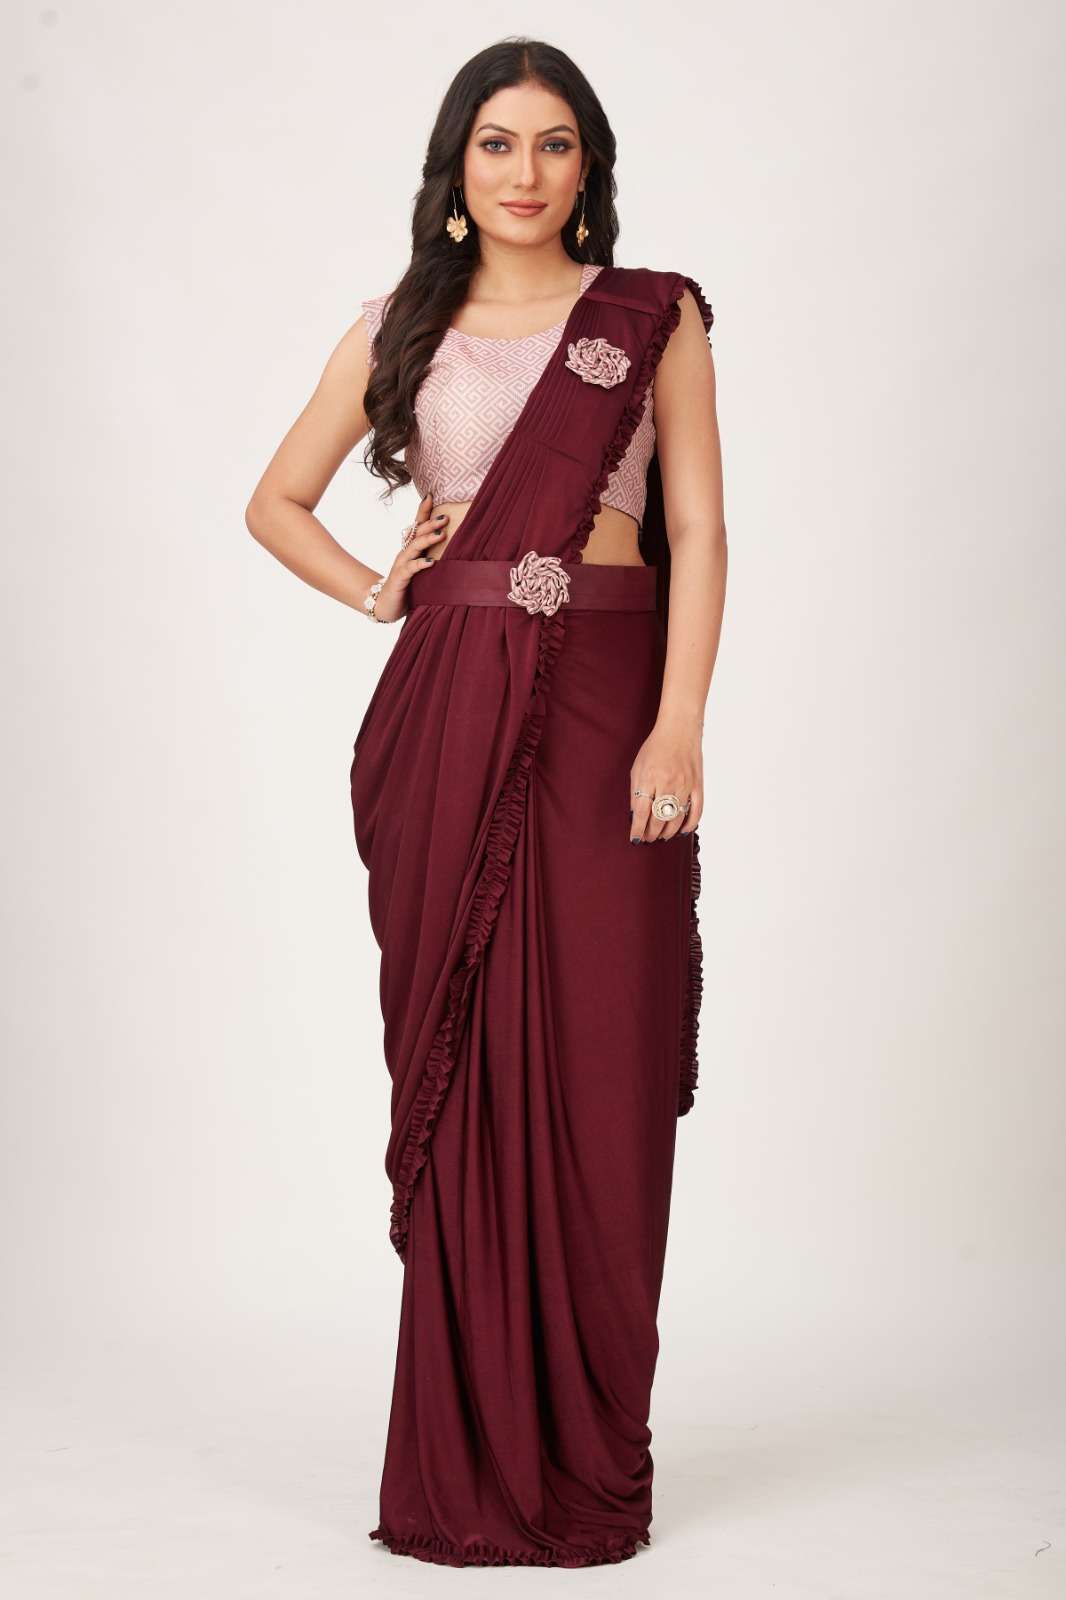 Niharika Konidela looks ravishing in a red ruffle saree! | Ruffle saree,  Bridal sarees south indian, Unique blouse designs